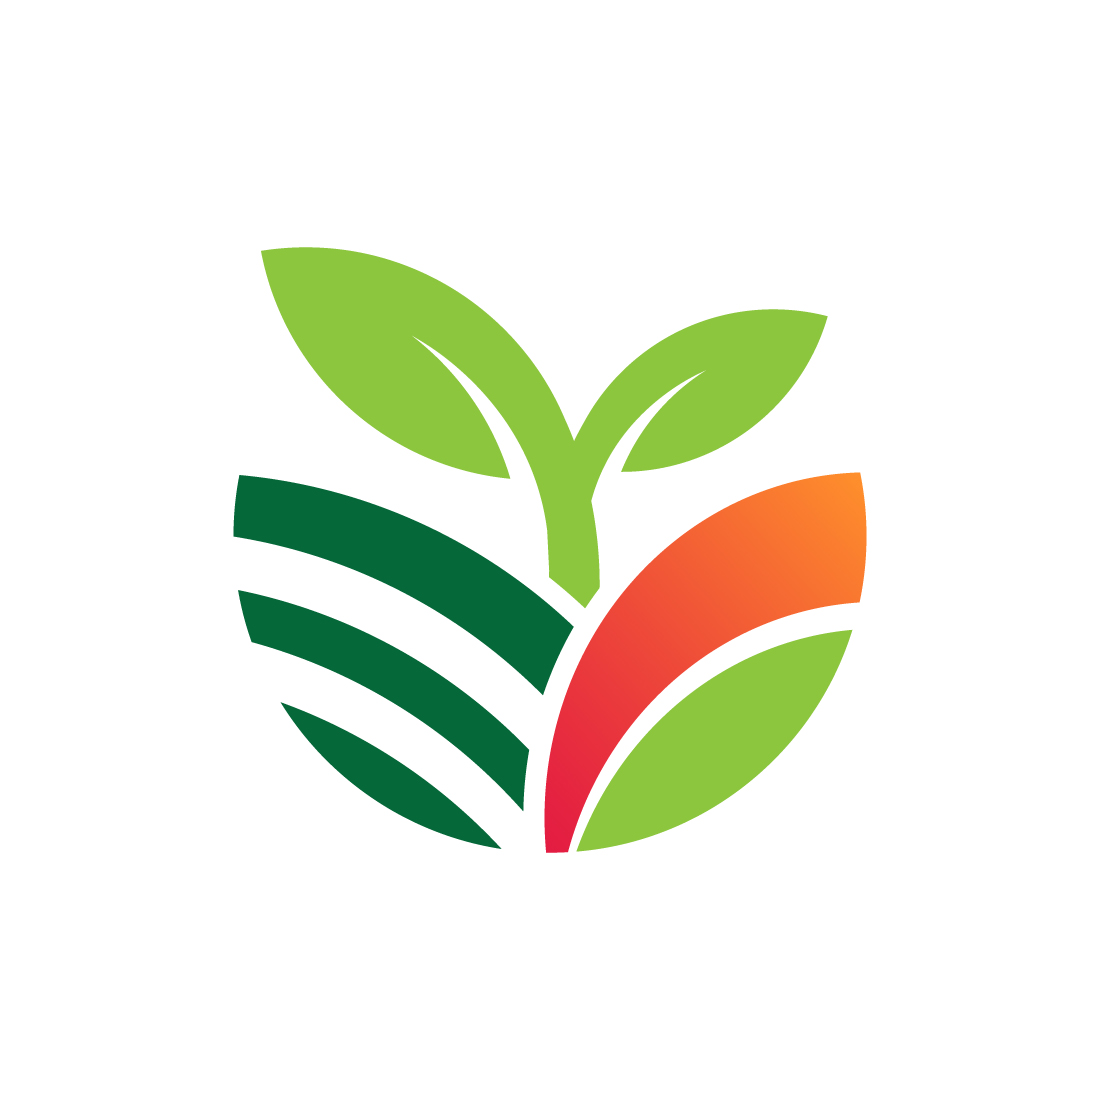 Farm Logo design for your brand preview image.